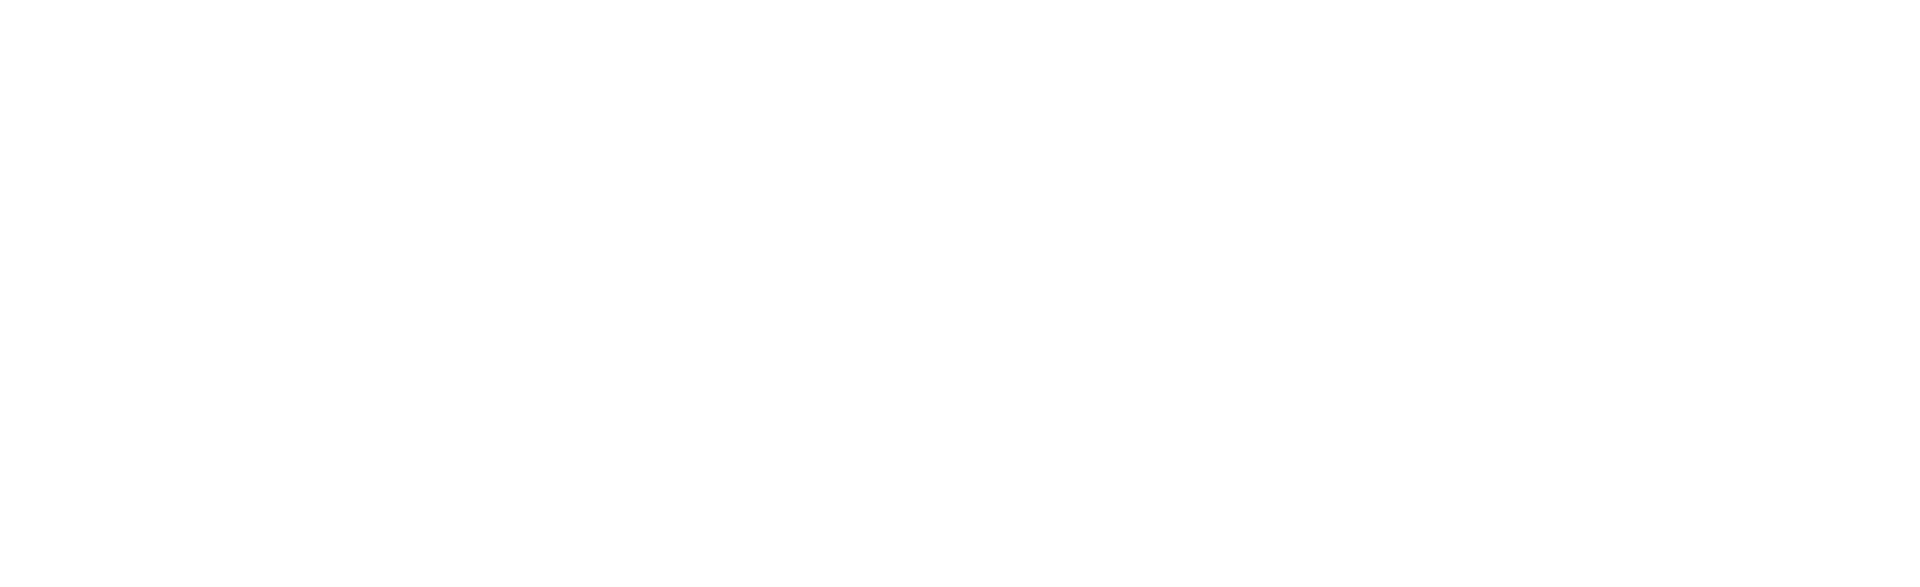 Sonepar-logo-White-RGB